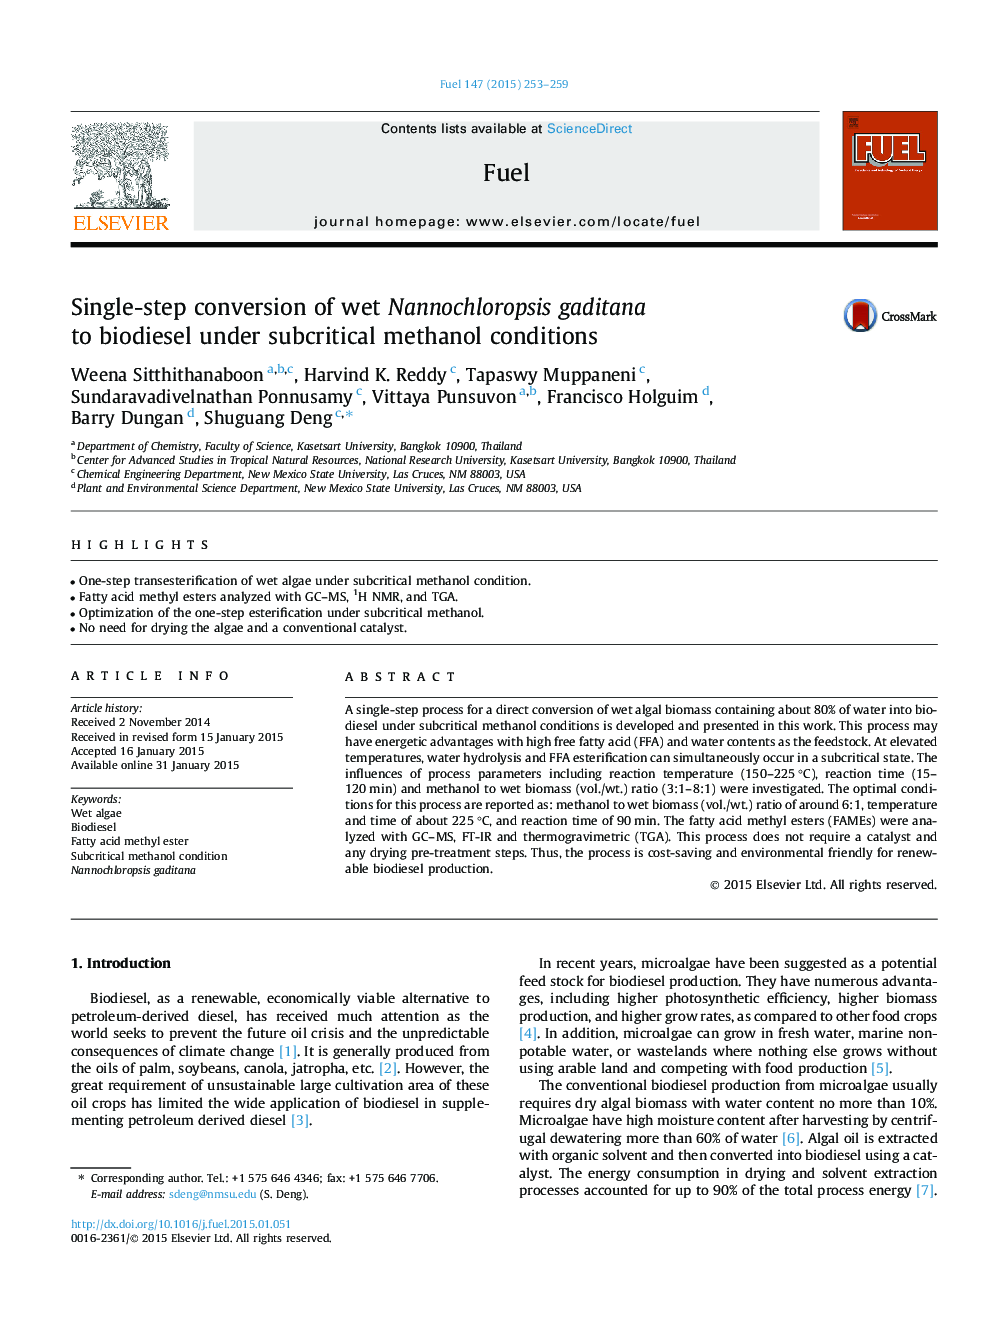 Single-step conversion of wet Nannochloropsis gaditana to biodiesel under subcritical methanol conditions